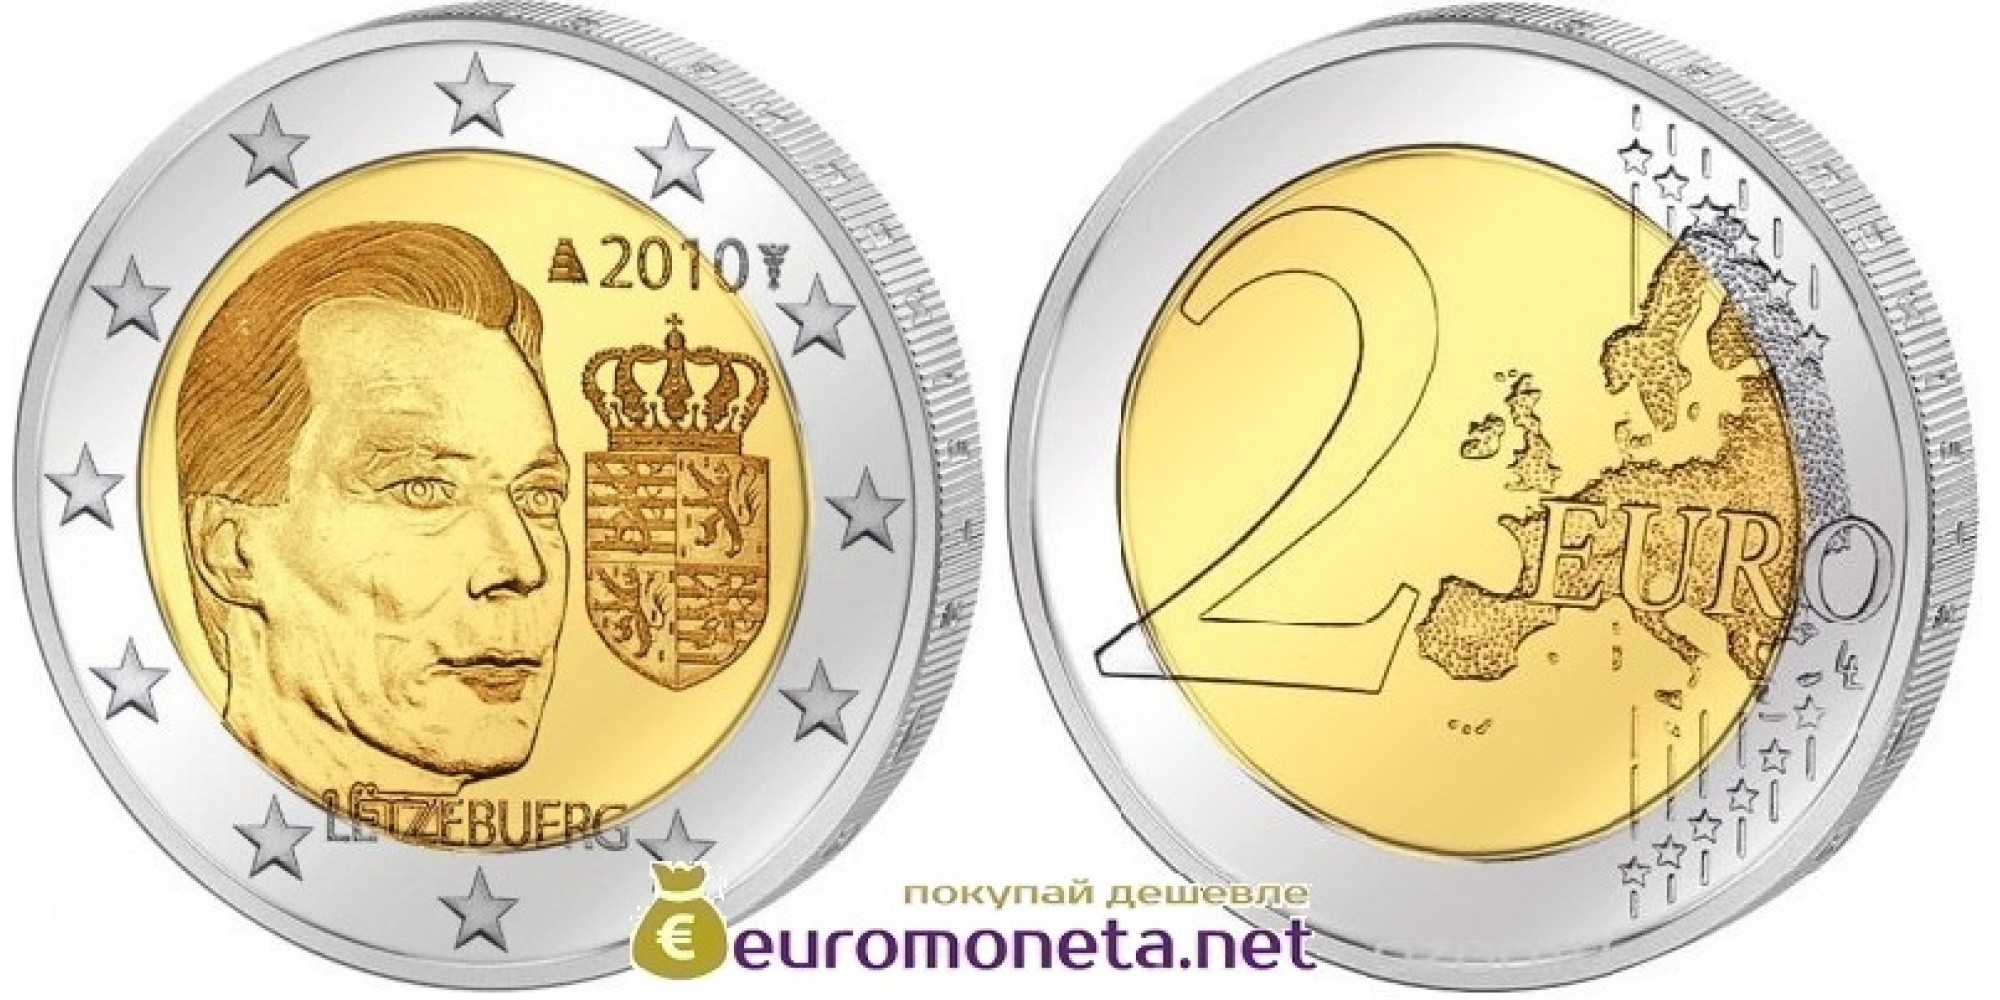 Люксембург 2 евро 2010 год Герб Великого герцога Люксембурга, биметалл АЦ из ролла